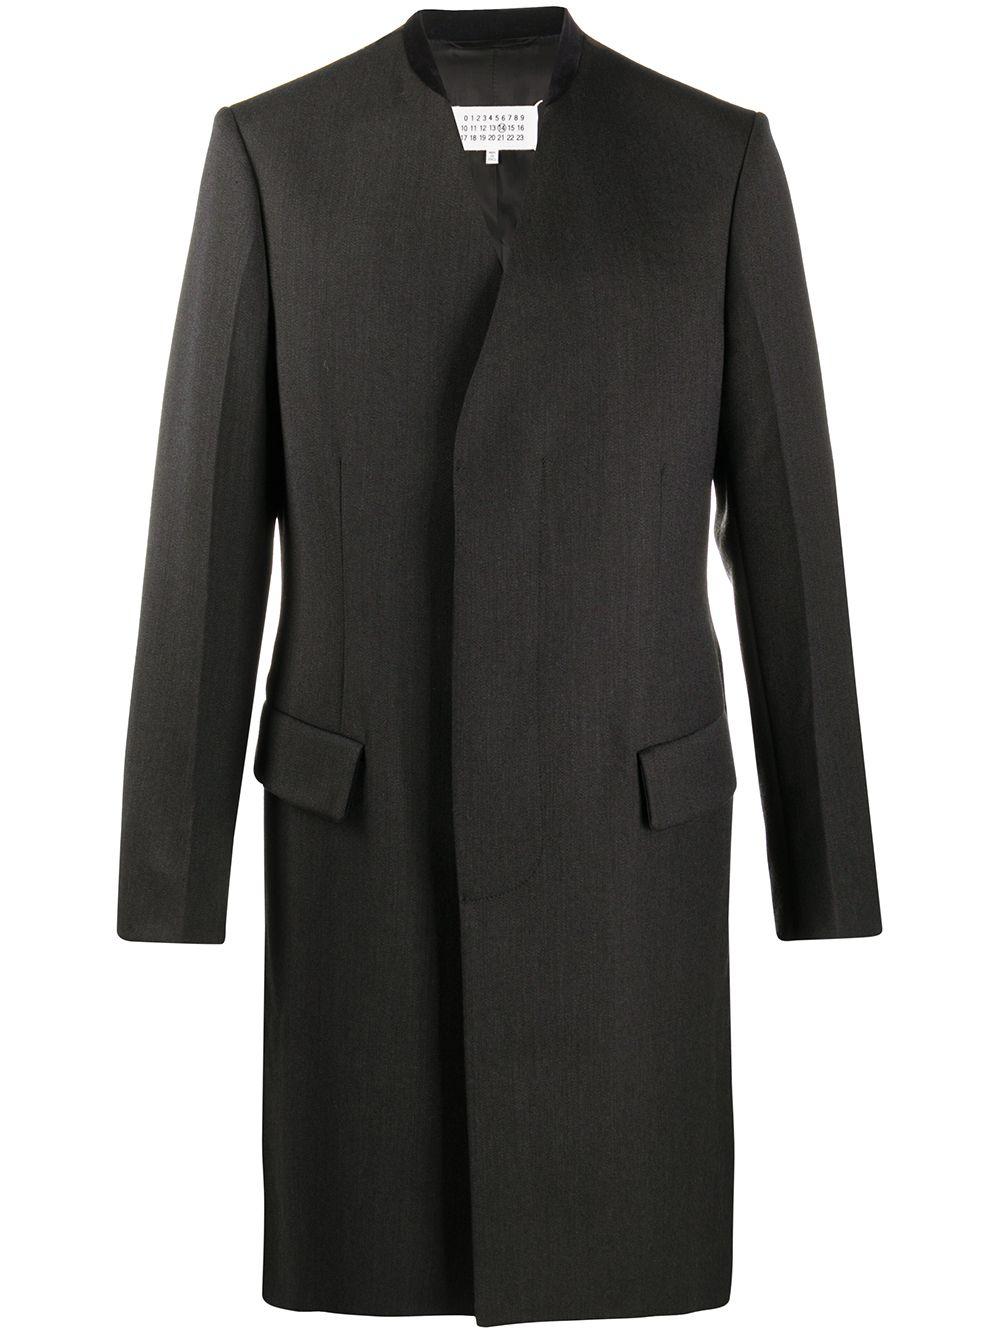 Maison Margiela Wool Collarless Twill Coat in Grey (Gray) for Men - Lyst